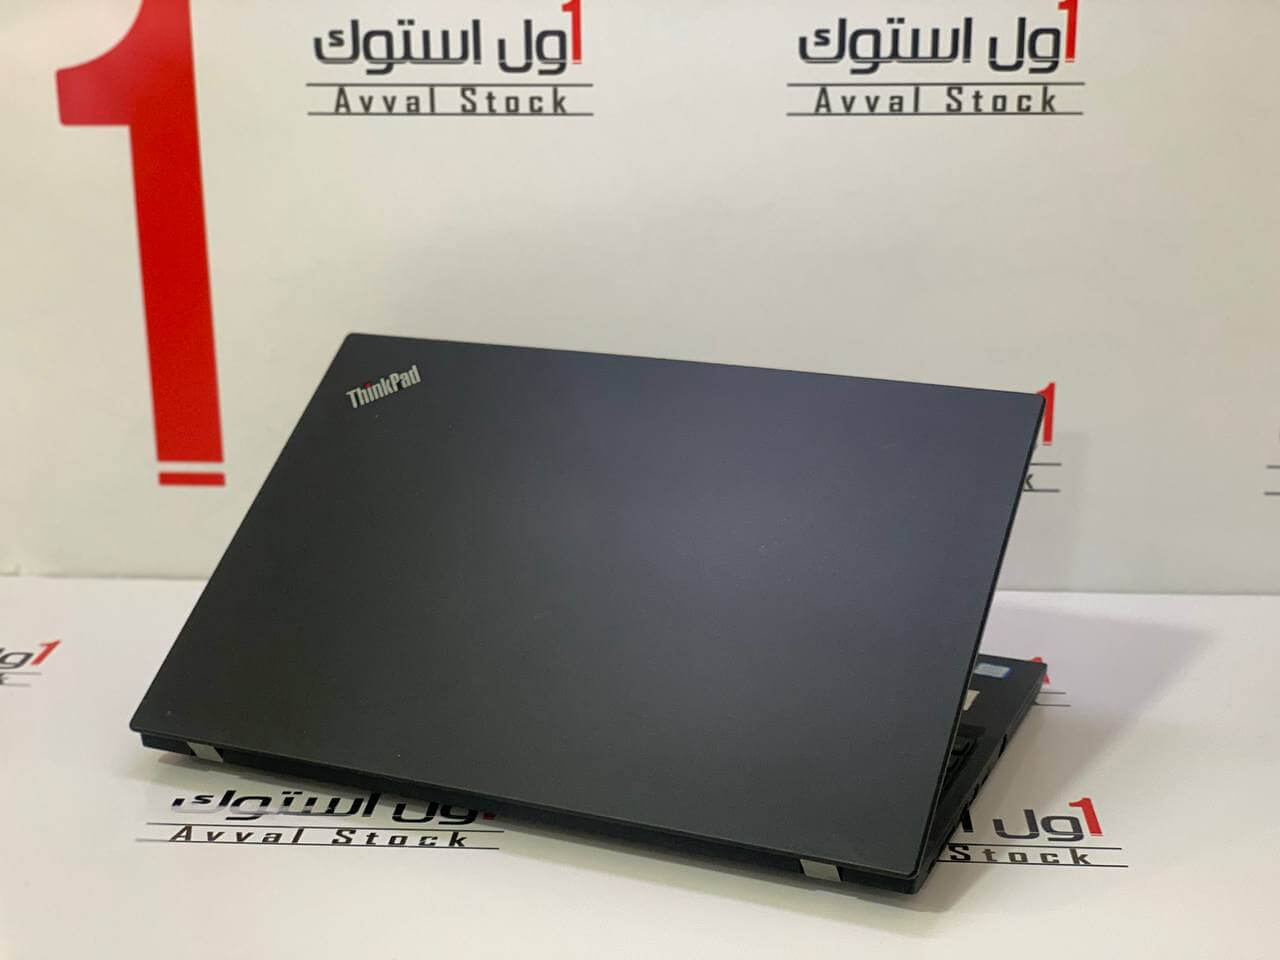 لپ تاپ لنوو مدل ThinkPad L590